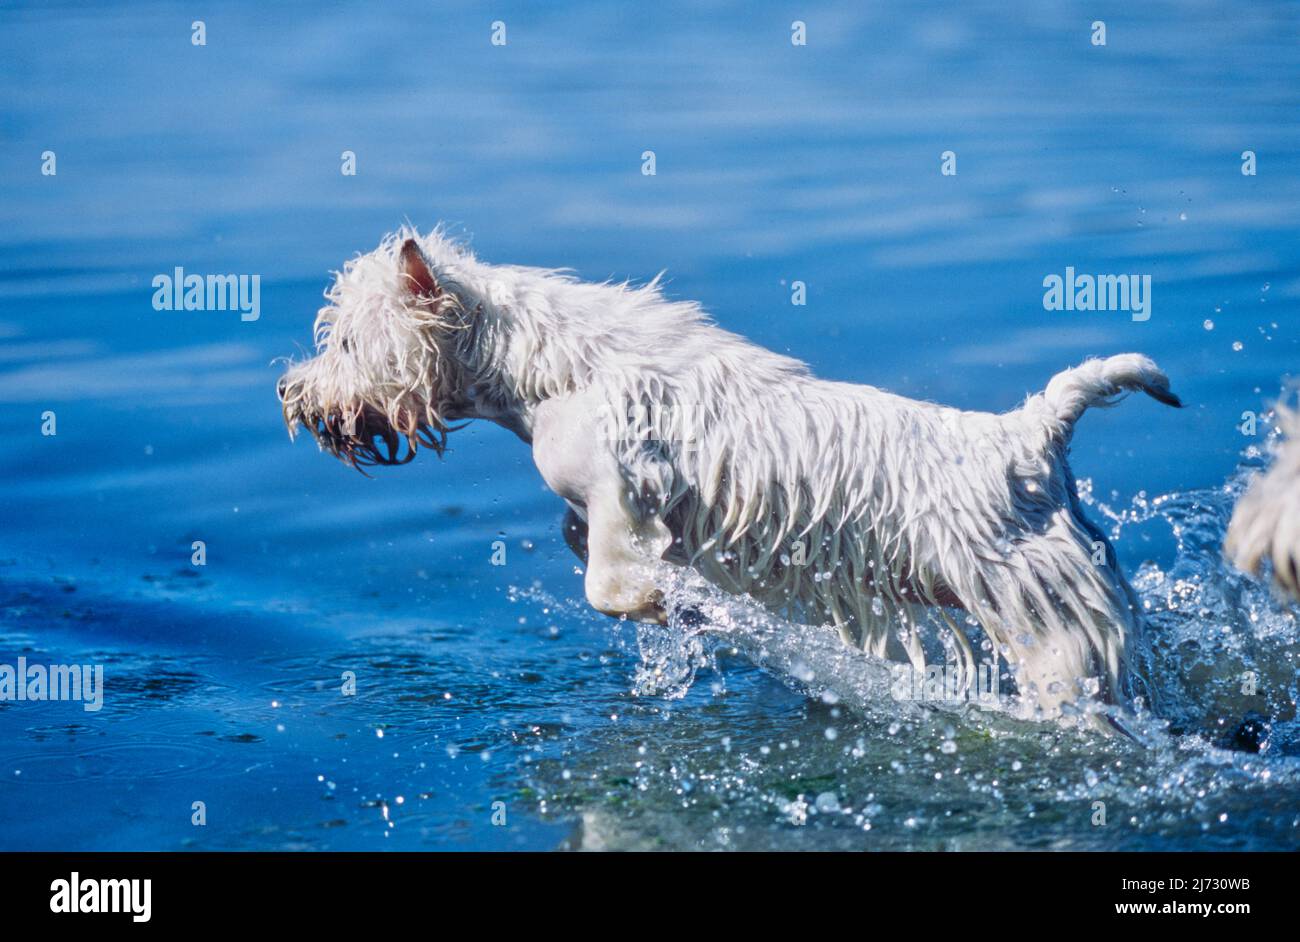 West Highland White Terrier running through water Stock Photo